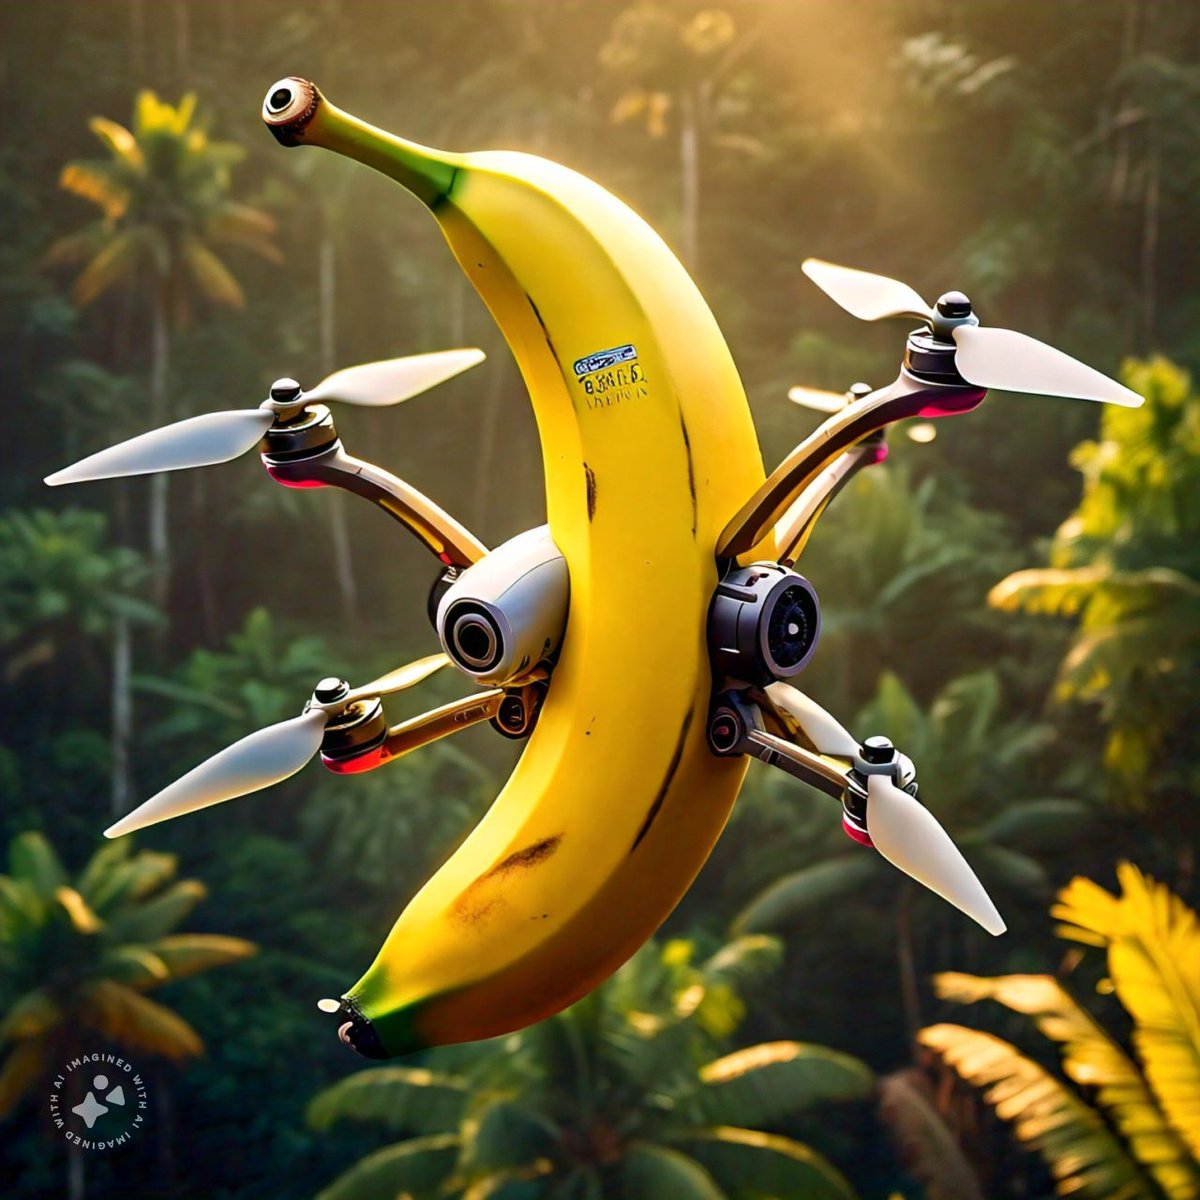 Newest IAF Drone 🫡 #Bananacide